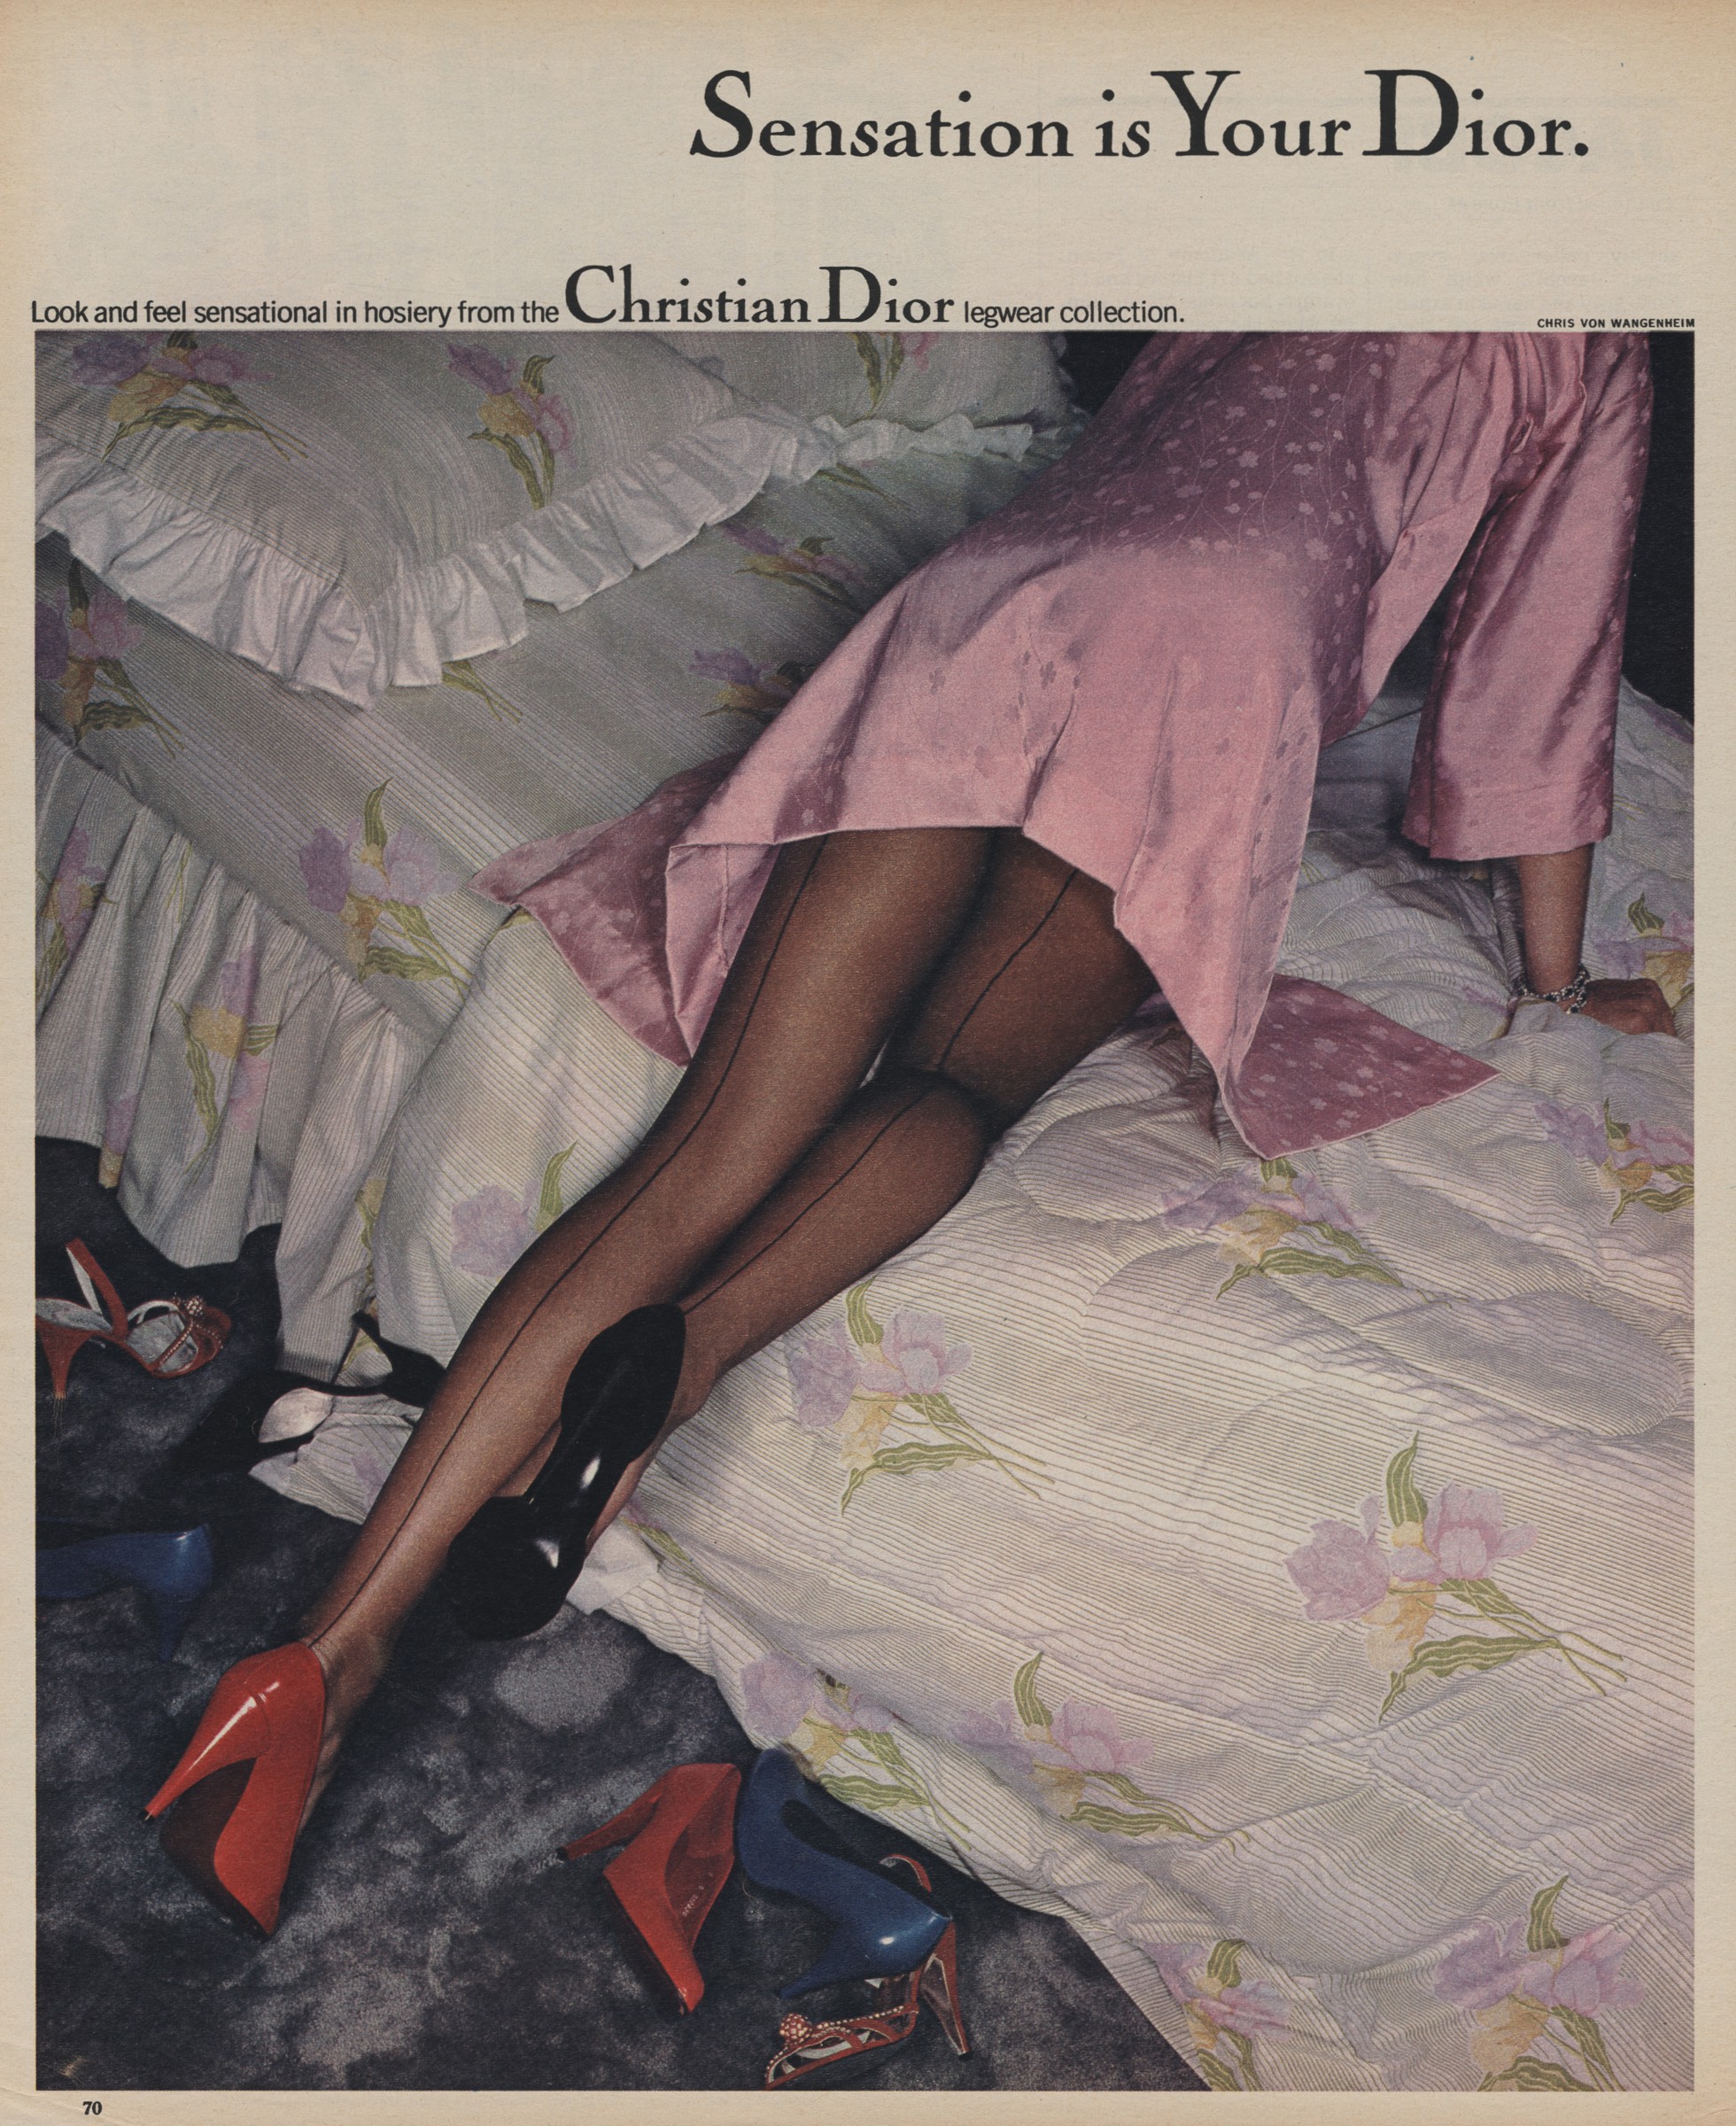 Christian Dior — Museum Hosiery